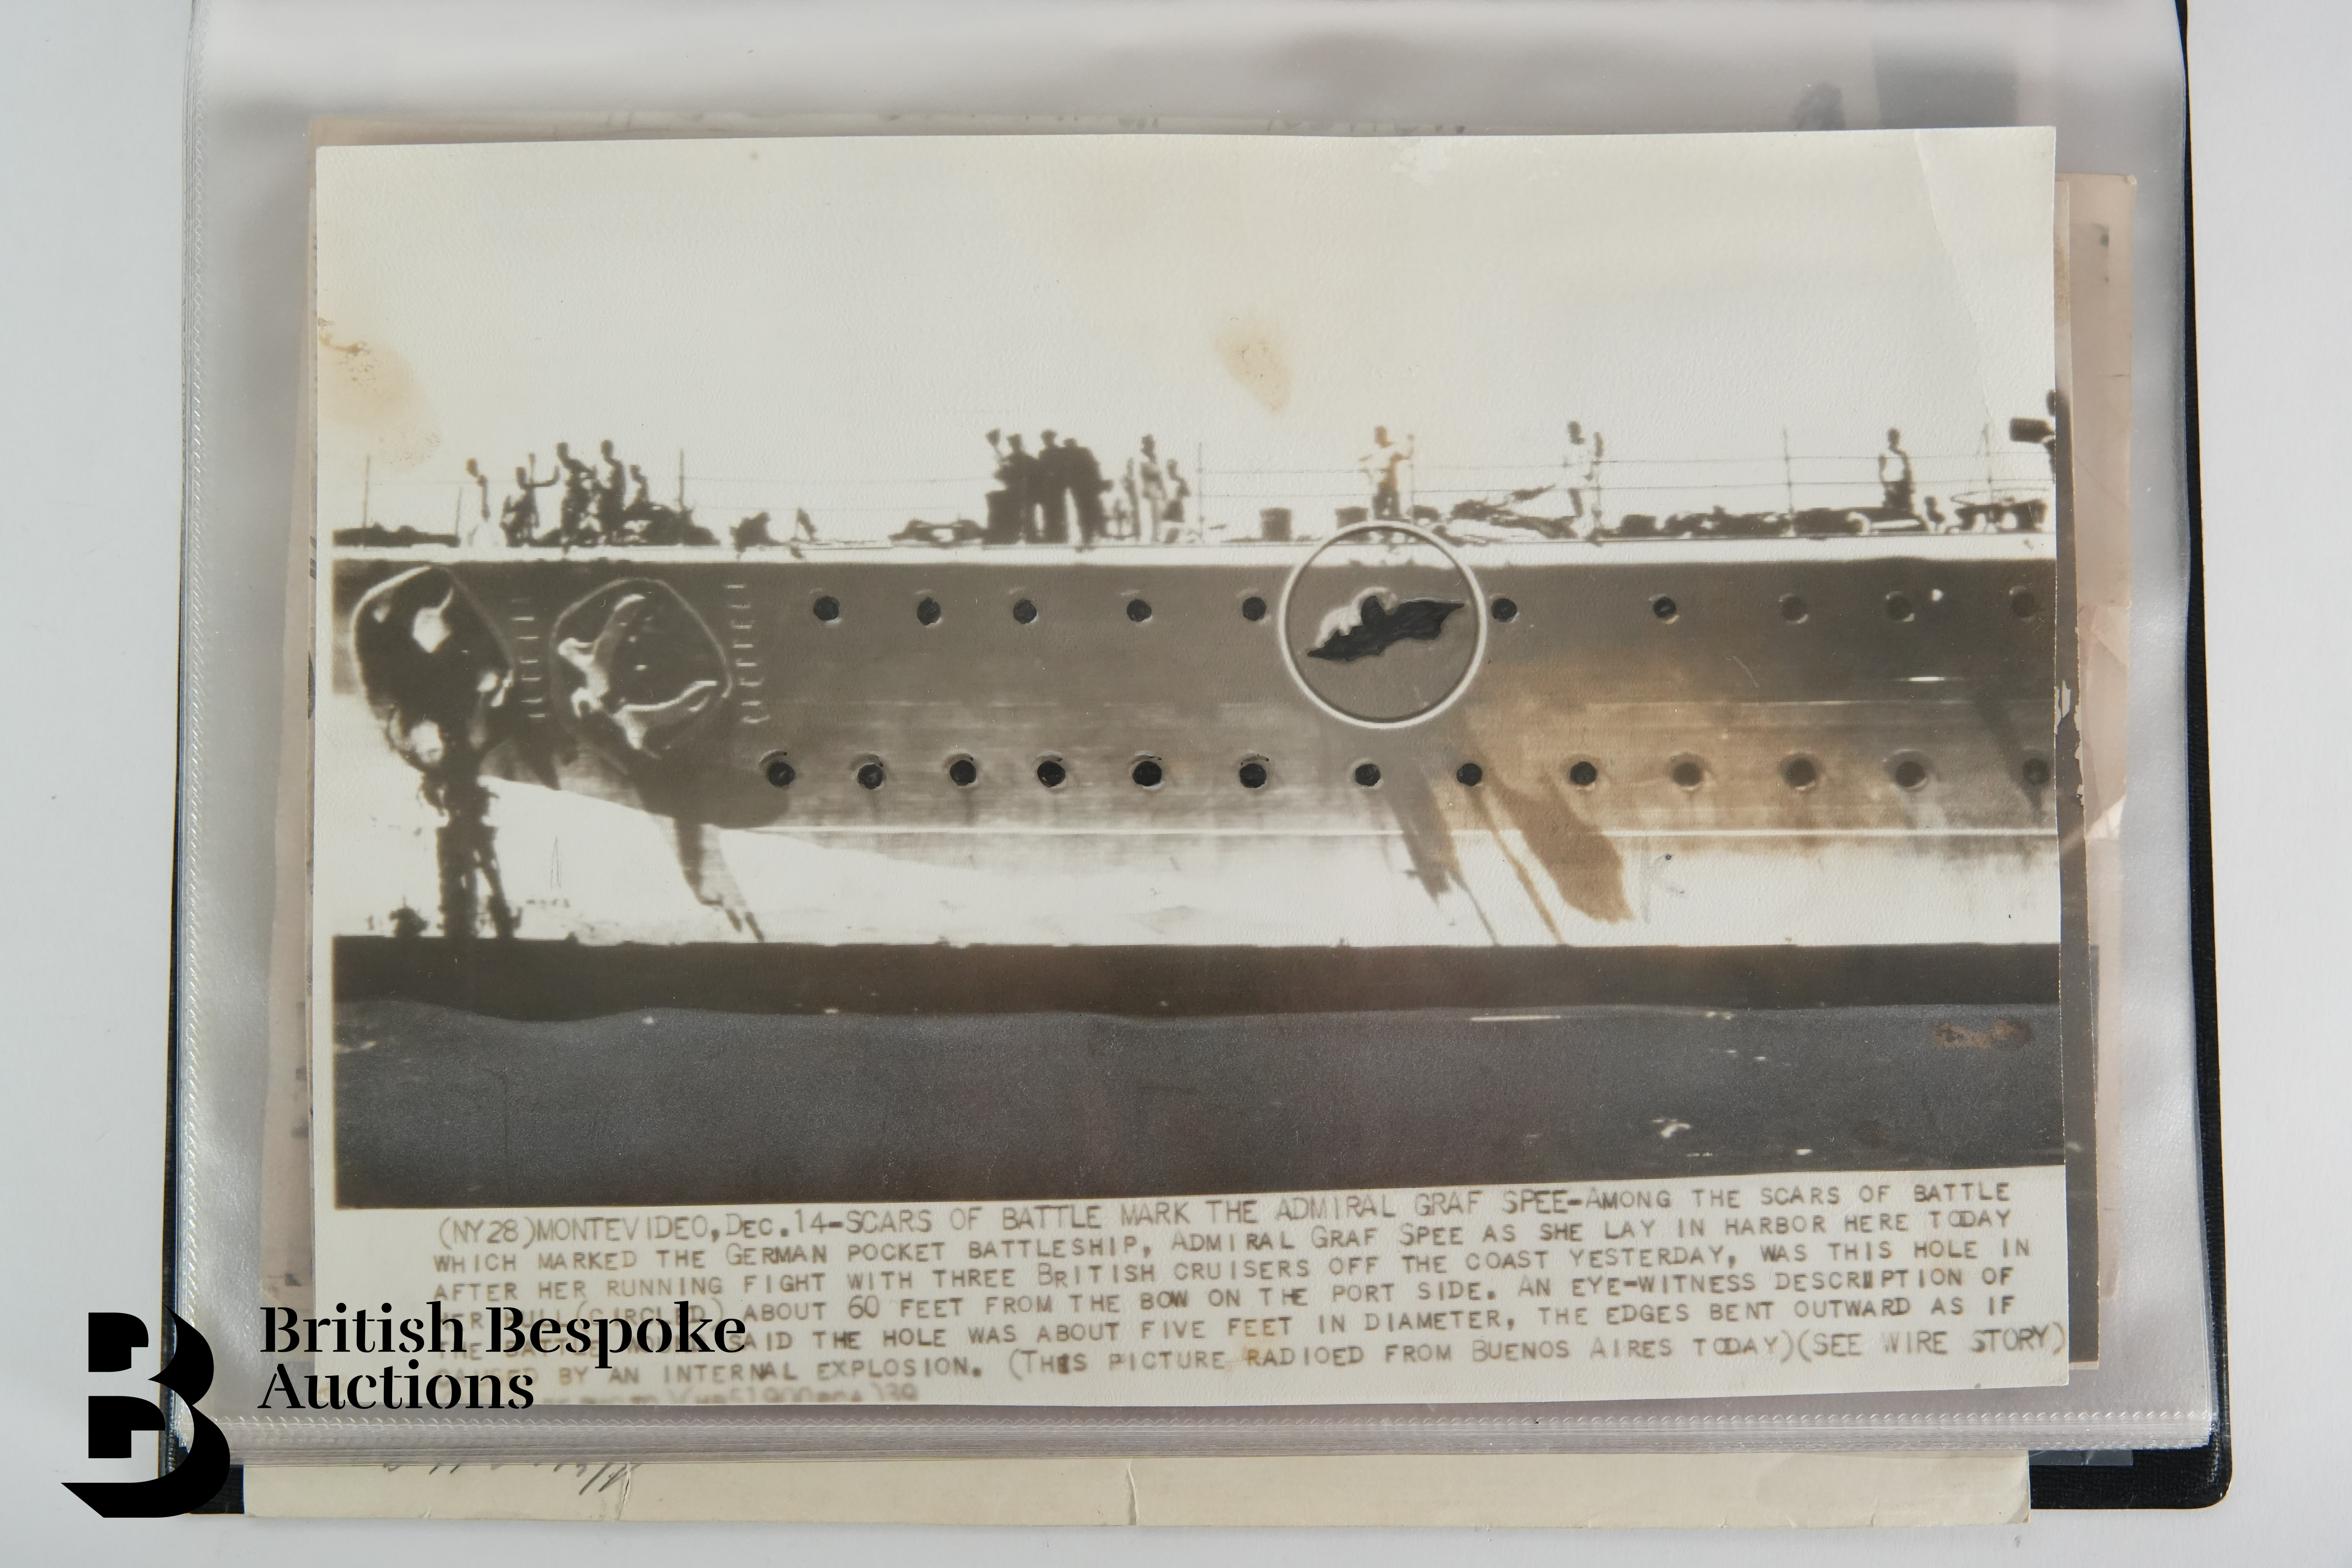 Graf Spee (Pocket Battleship) Interest, incl. Photographs, Documents, Miscellanea - Image 25 of 126